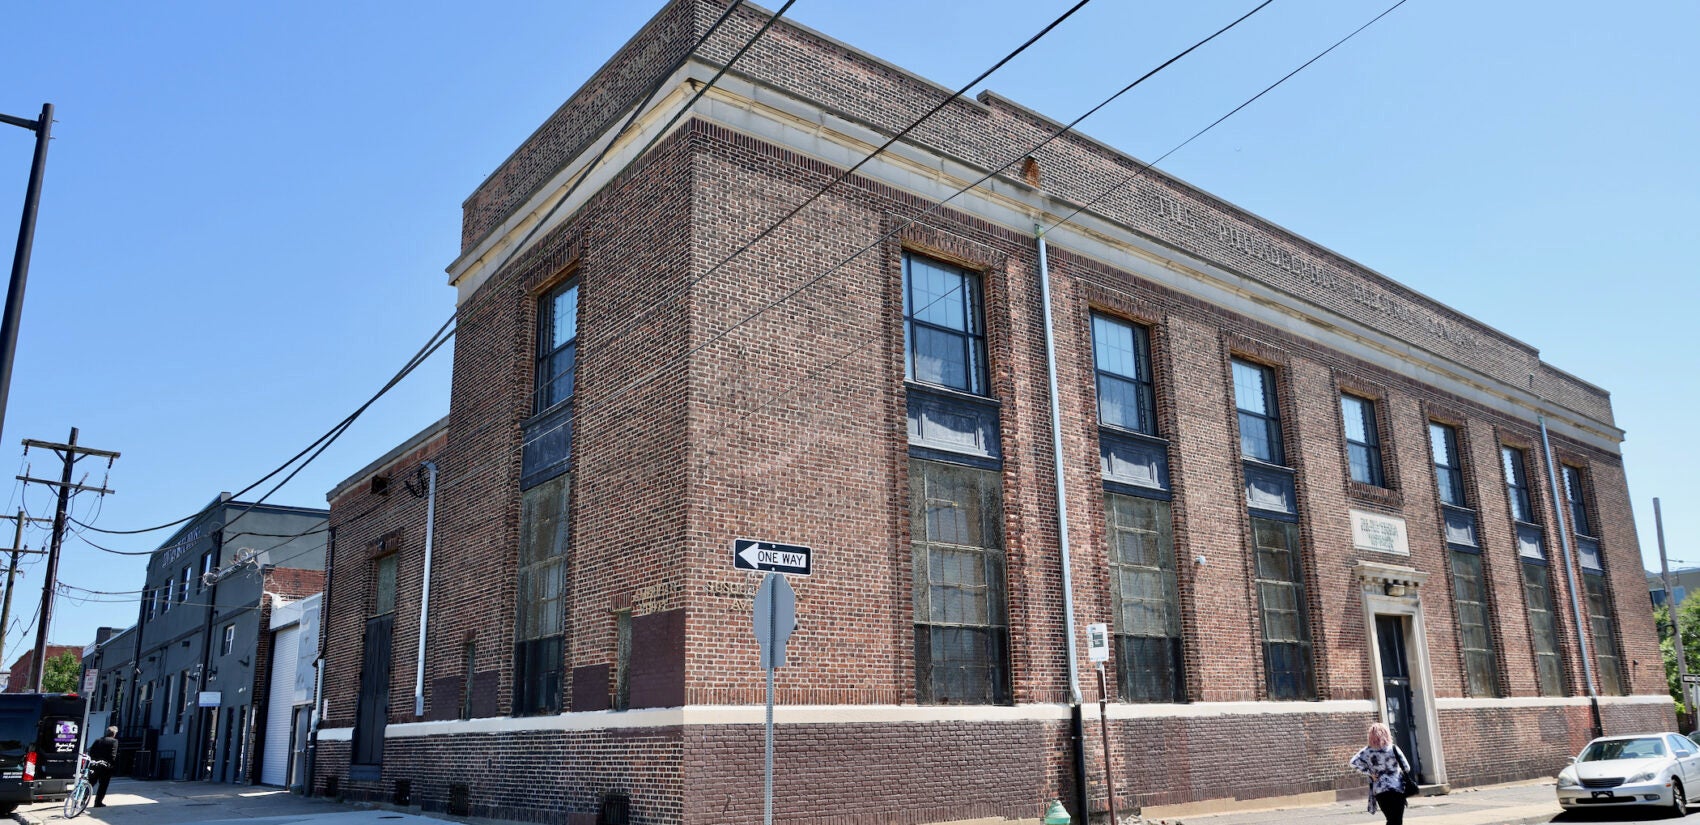 the exterior of The former Philadelphia Electric Company Susquehanna substation